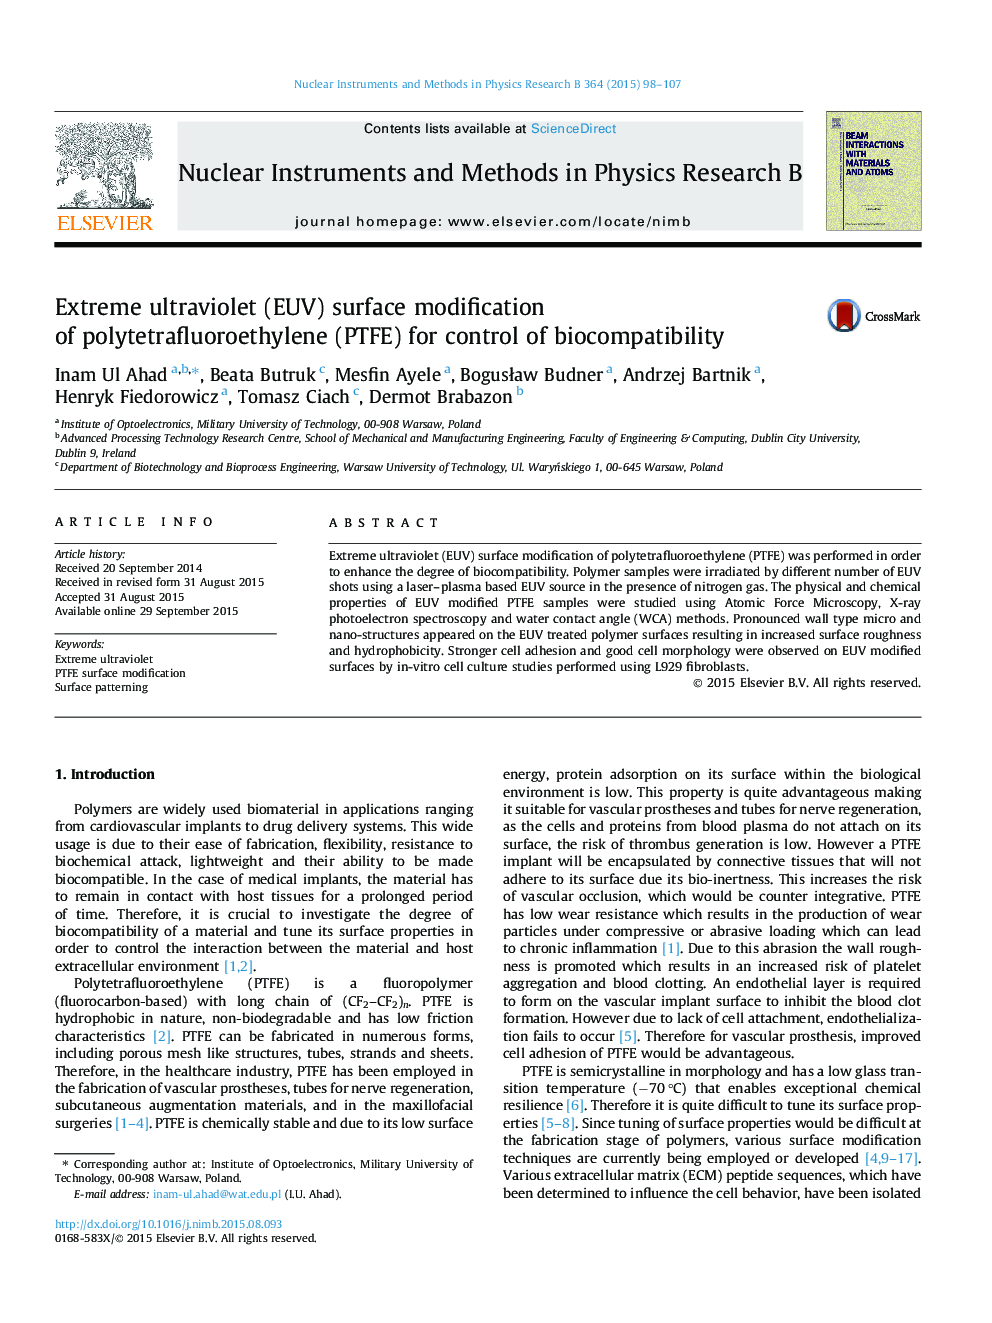 Extreme ultraviolet (EUV) surface modification of polytetrafluoroethylene (PTFE) for control of biocompatibility